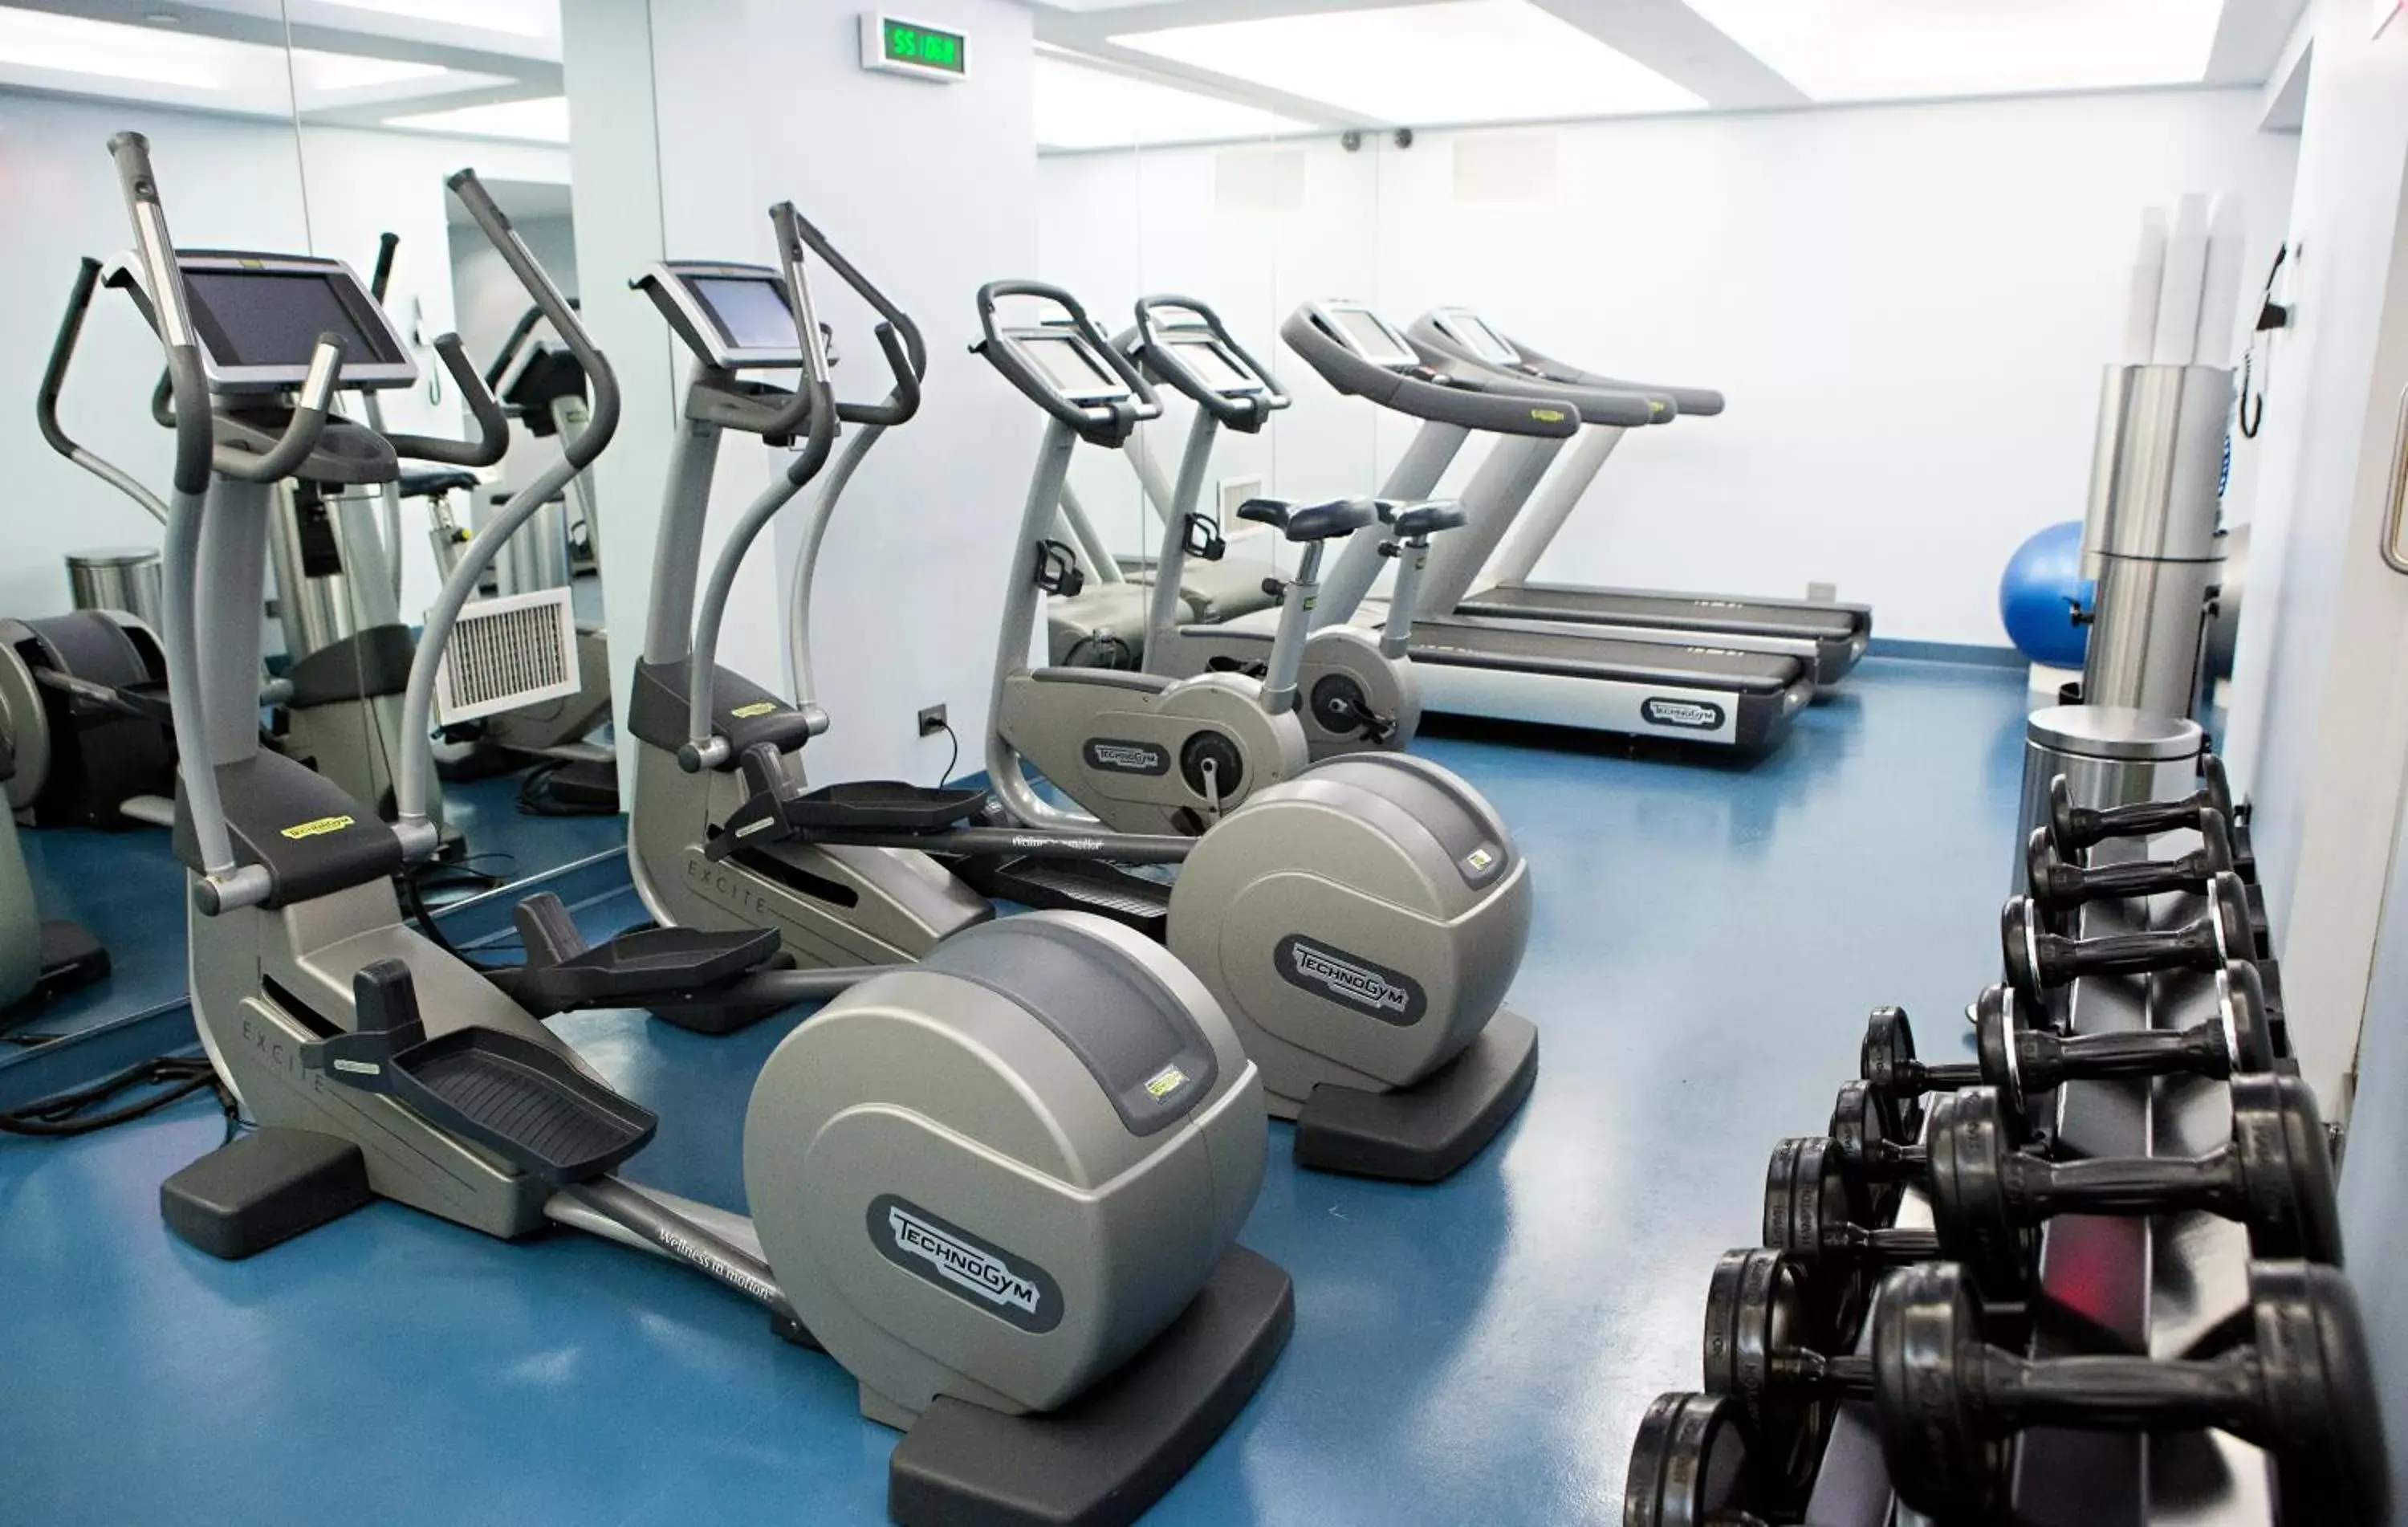 Fitness centre/facilities, Fitness Center/Facilities in Shoreham Hotel